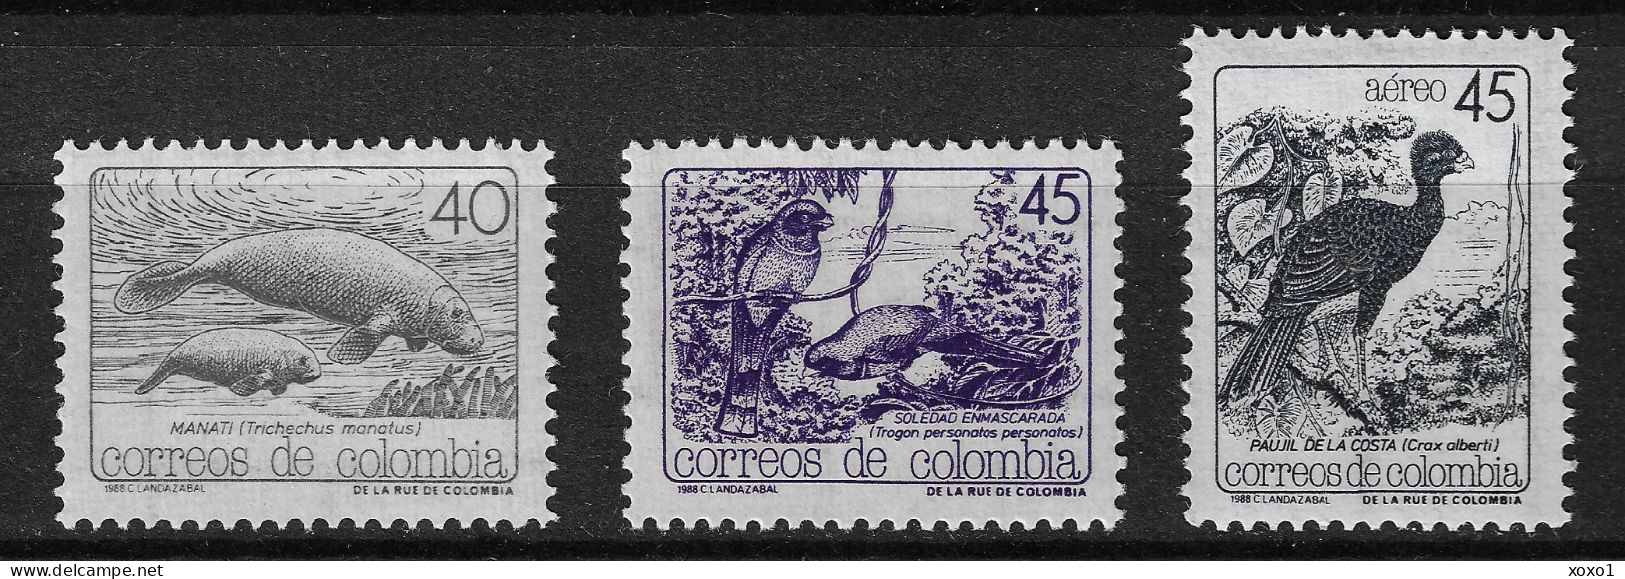 Colombia 1988 MiNr. 1741 - 1743 Kolumbien Mammals Manatee Birds Masked Trogon, Curassow 3v MNH** 3.00 € - Cranes And Other Gruiformes